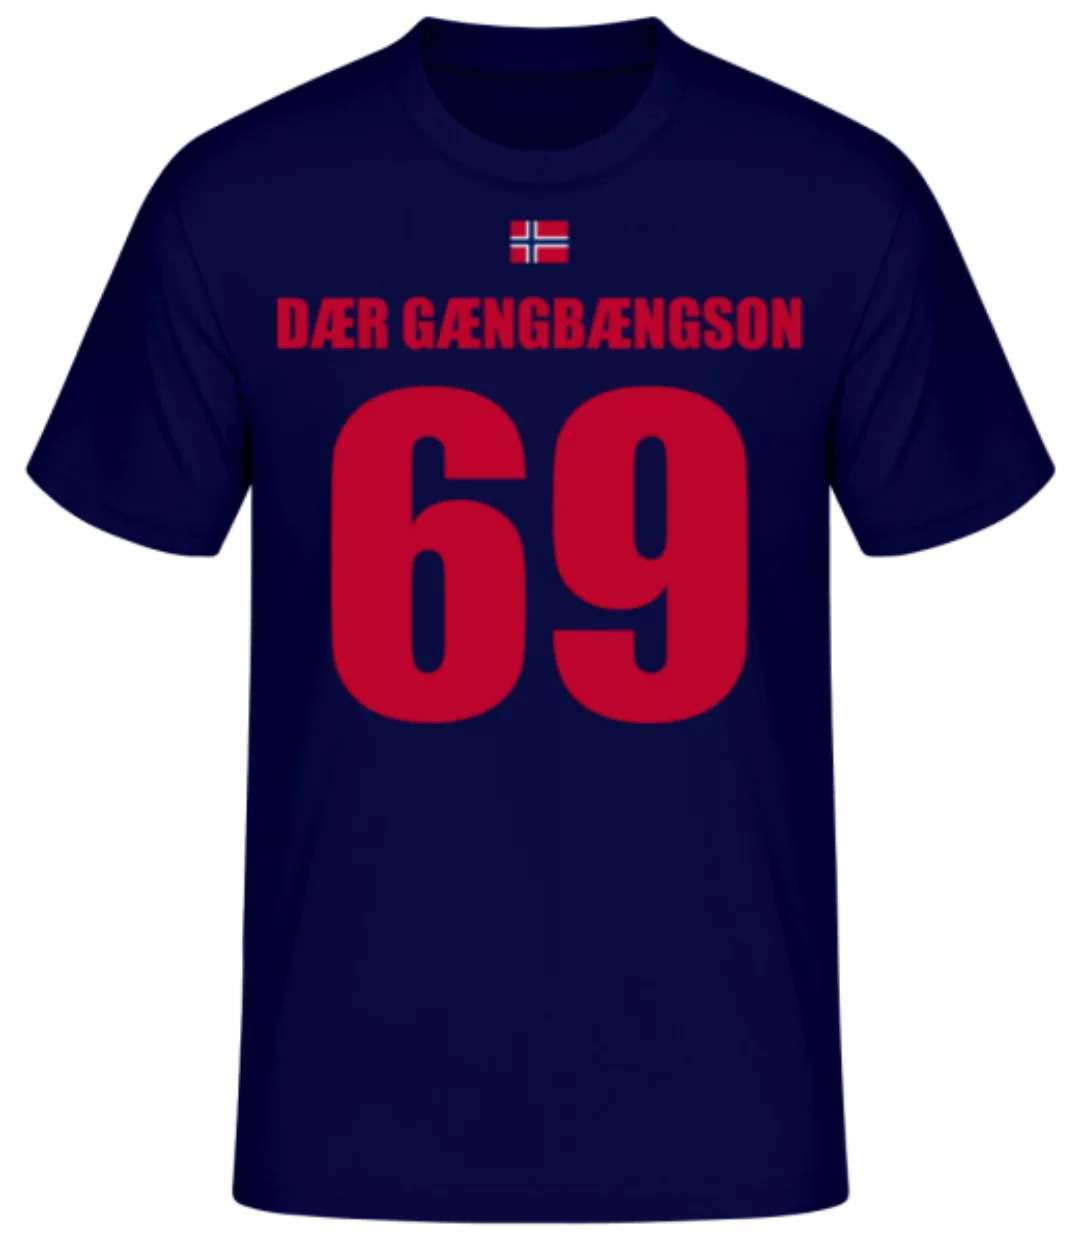 Norwegen Fußball Trikot Dær Gængbængson · Männer Basic T-Shirt günstig online kaufen